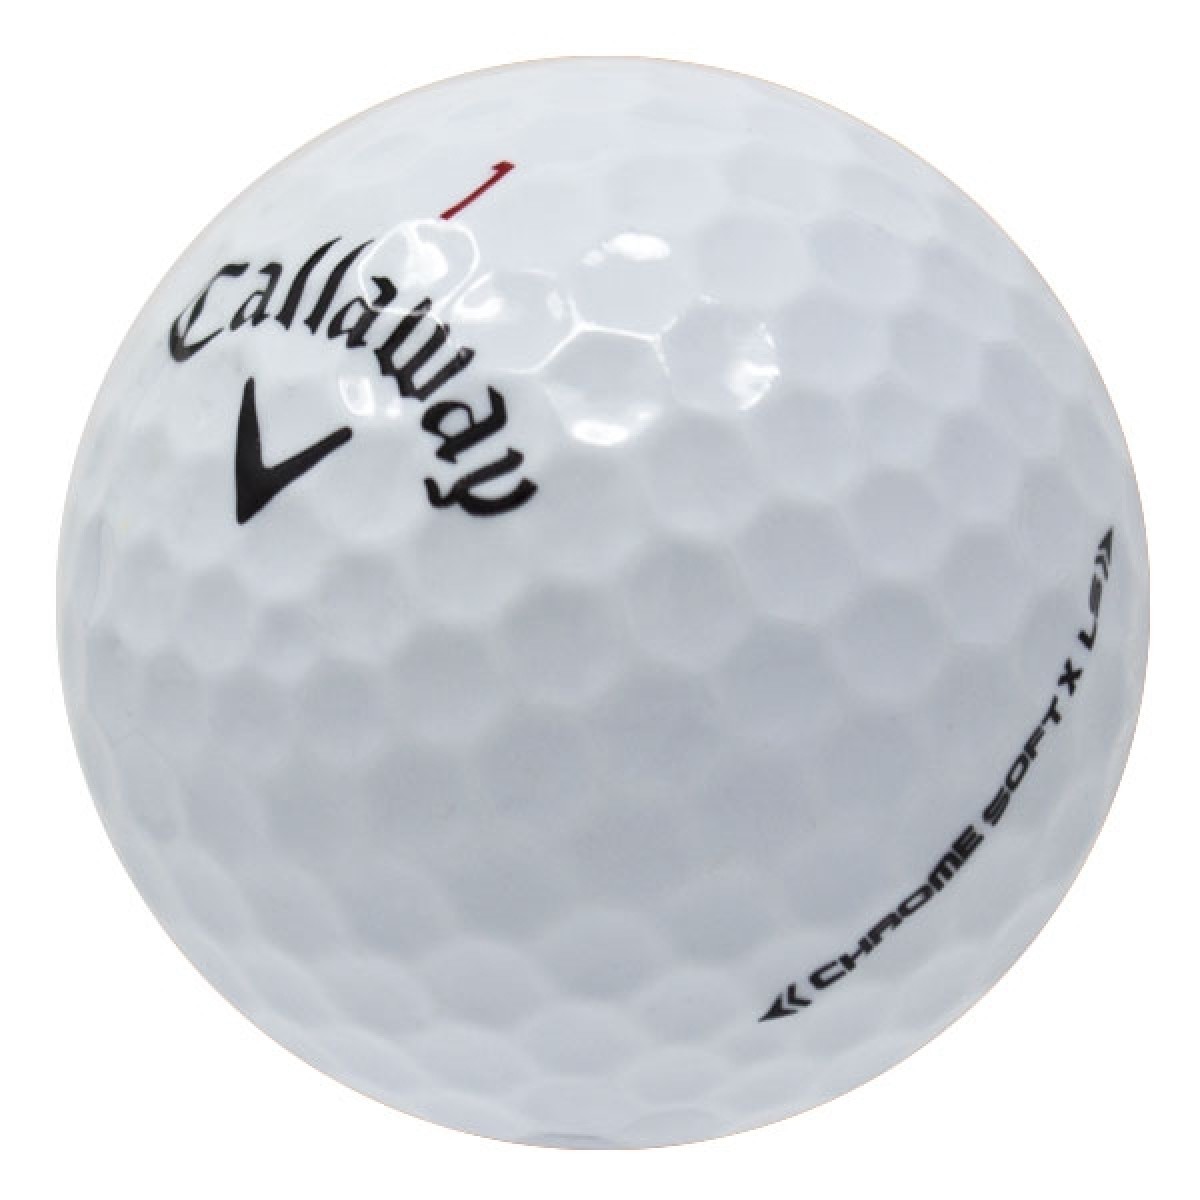 Callaway Chrome Soft X LS Used Golf Balls | Lostgolfballs.com